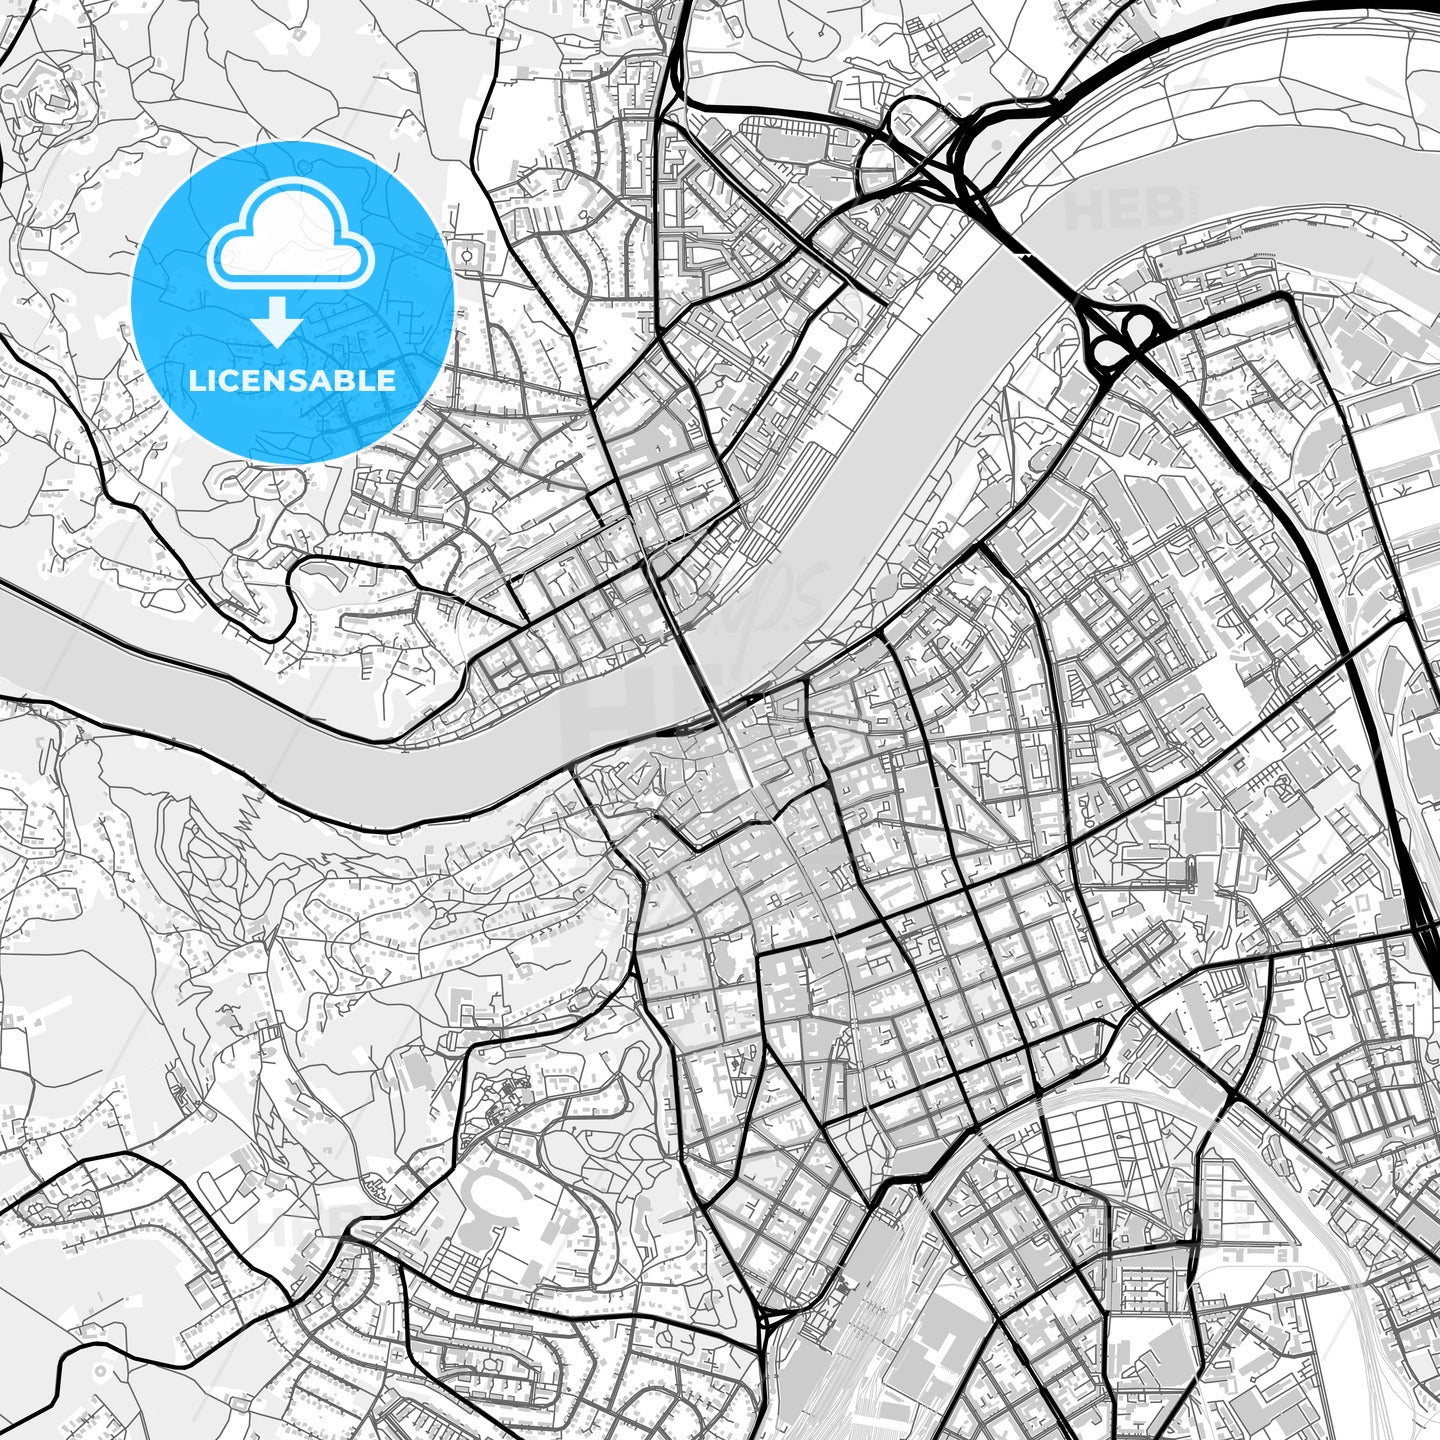 Downtown map of Linz, Austria